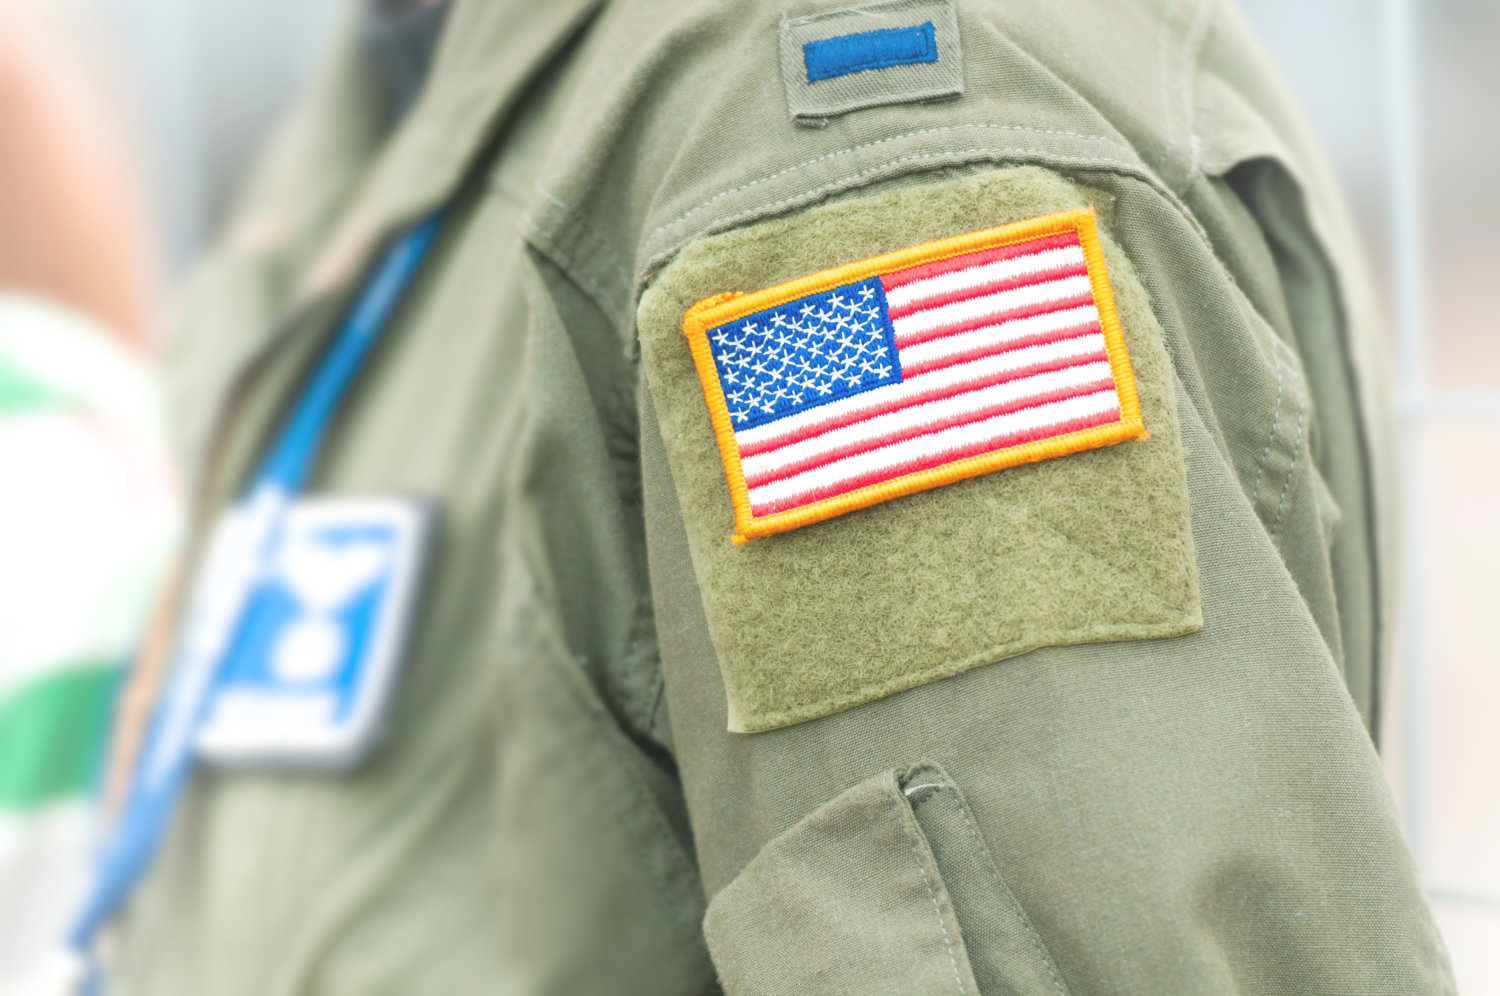 American flag on USAF uniform of person